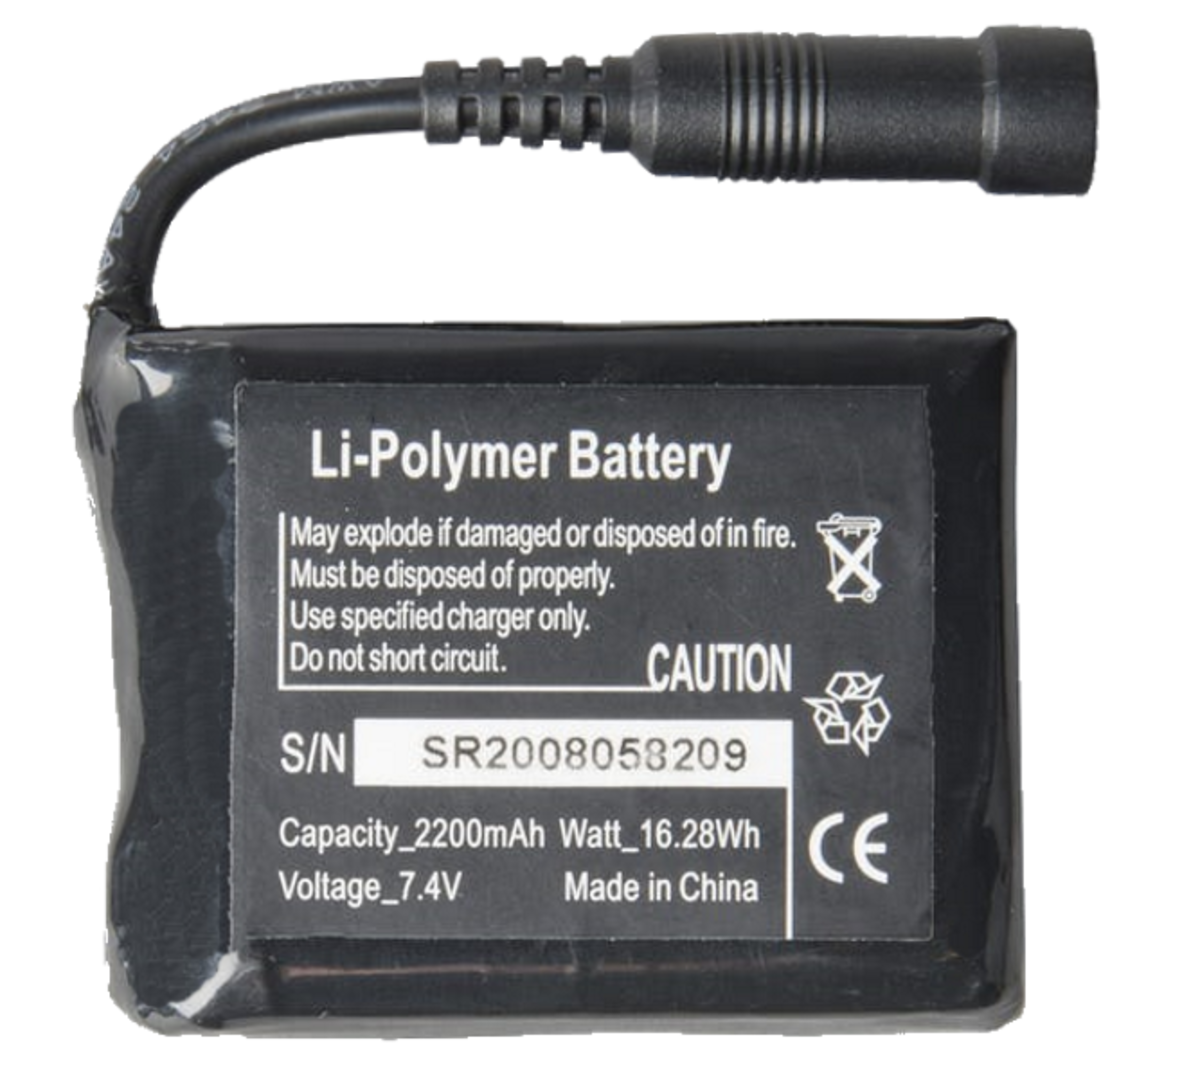 Lithium Polymer Battery, Gloves